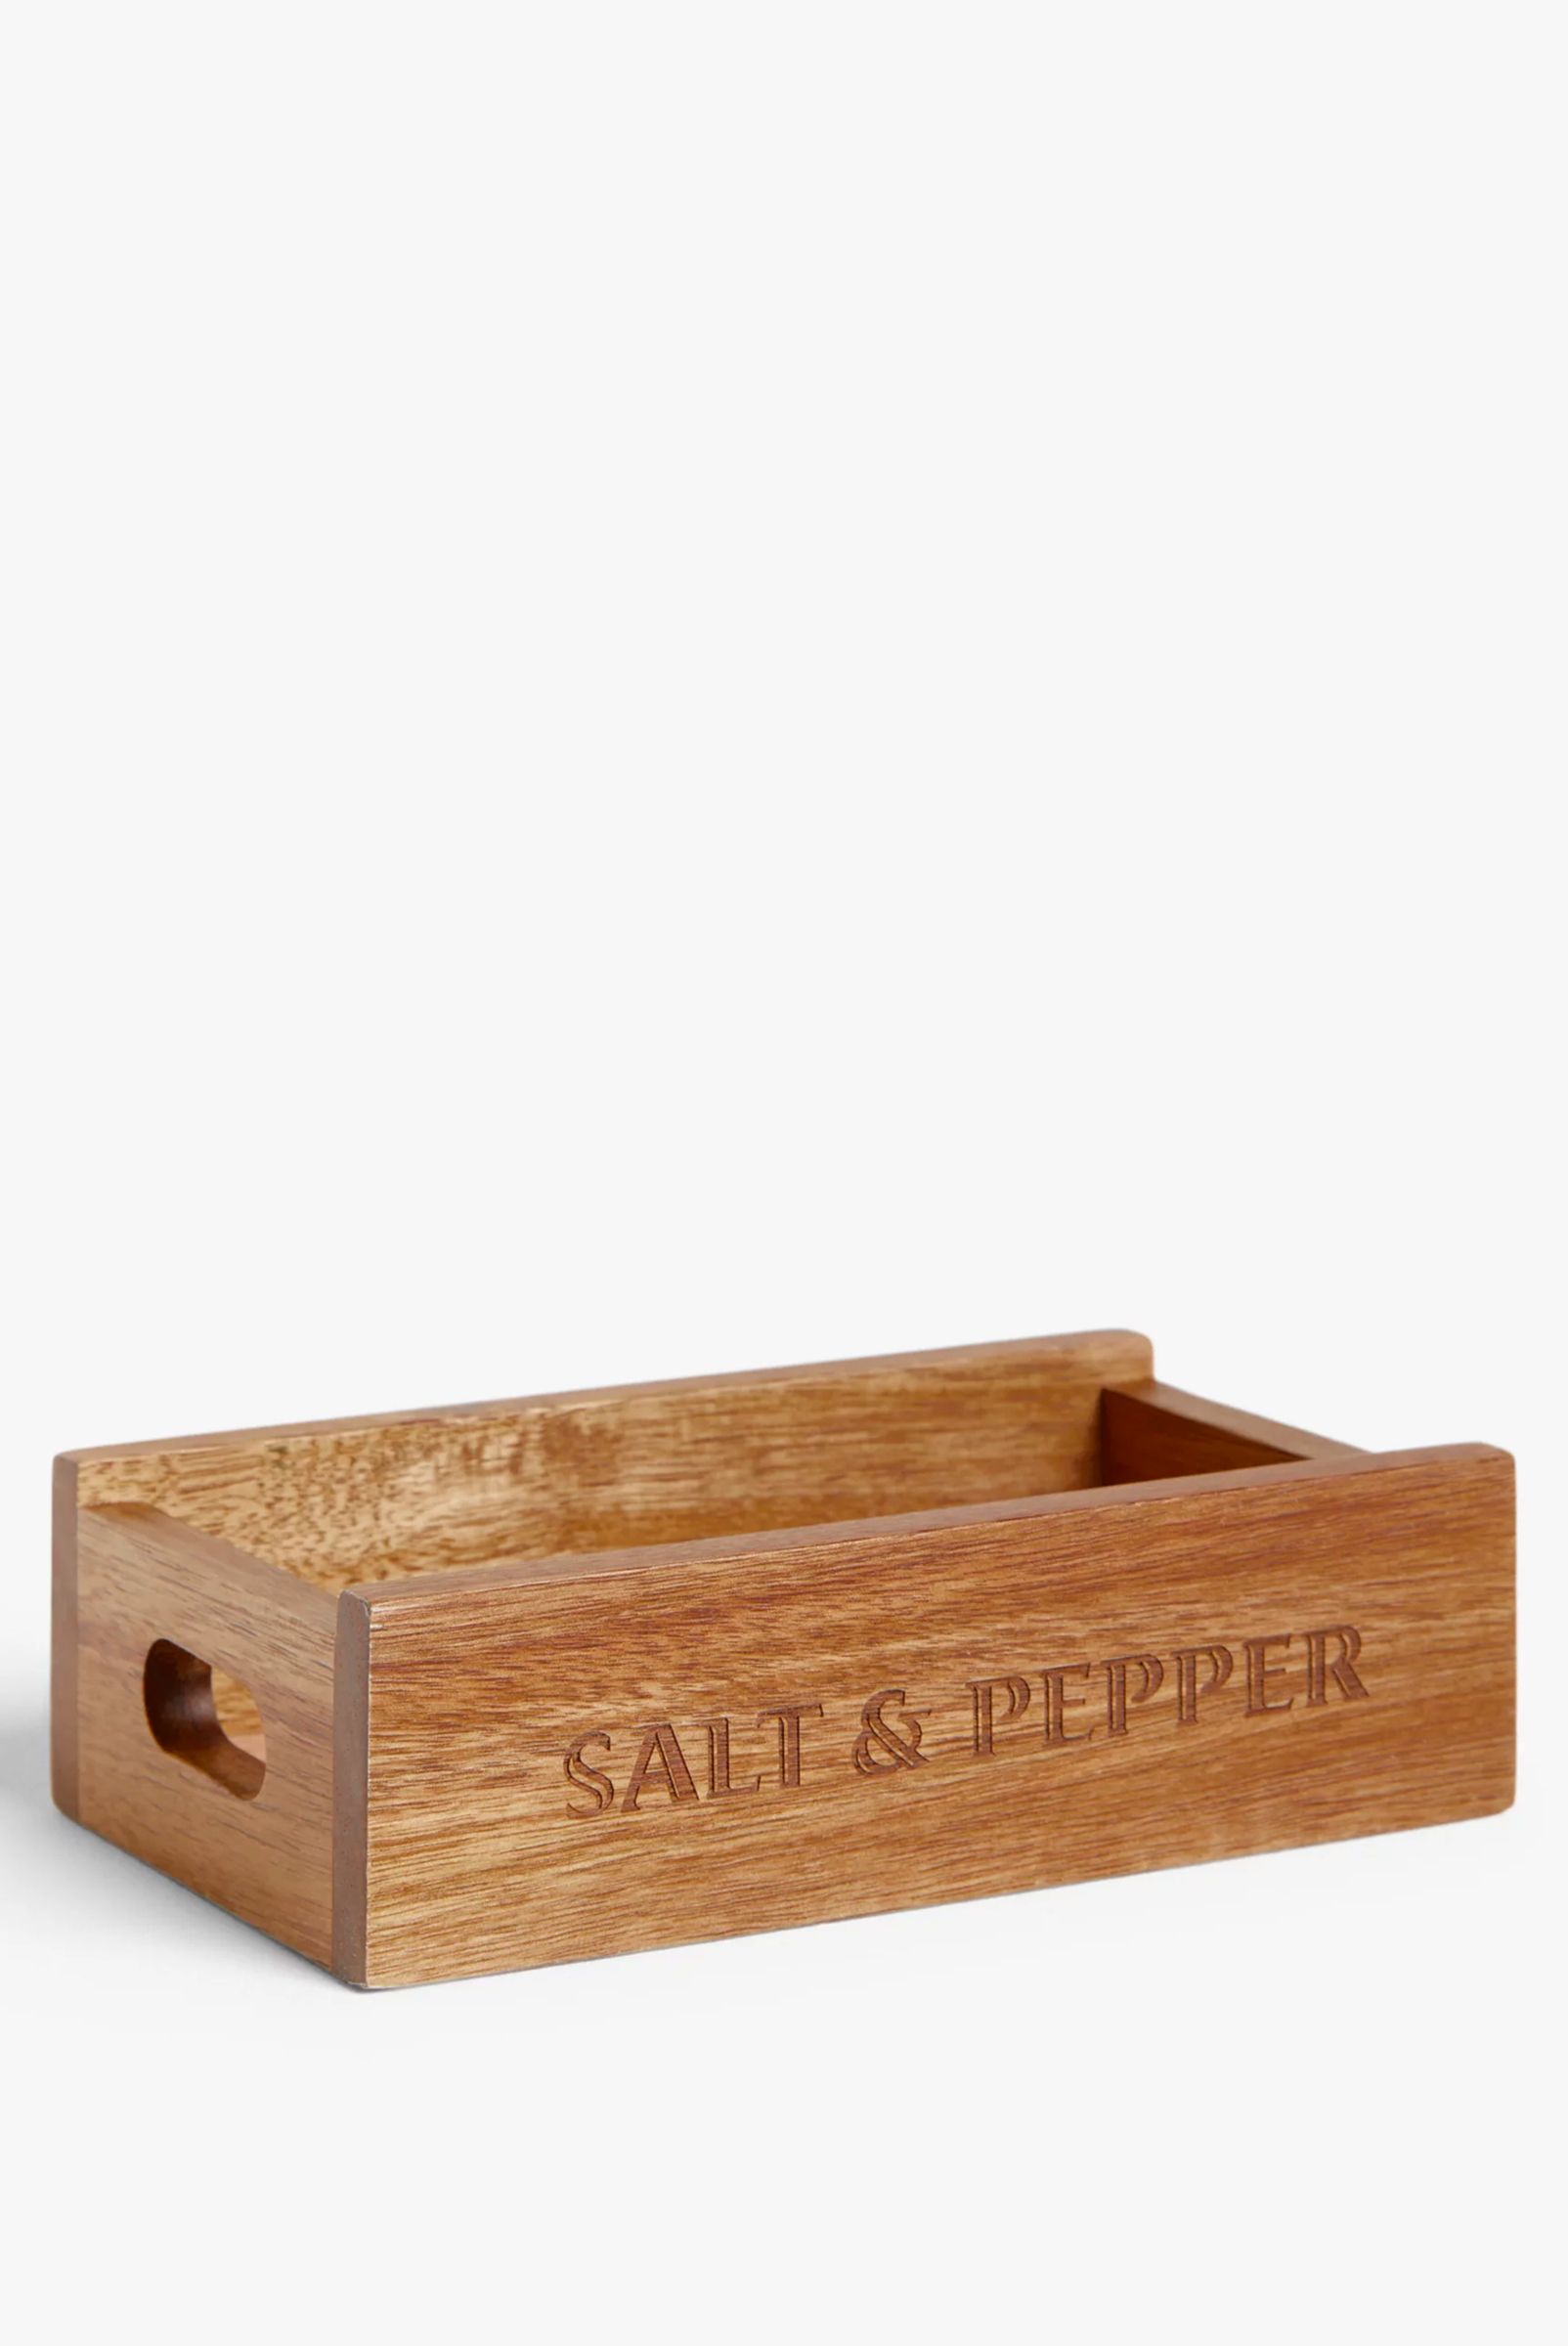 ANYDAY Acacia Wood Salt & Pepper Crate, £6